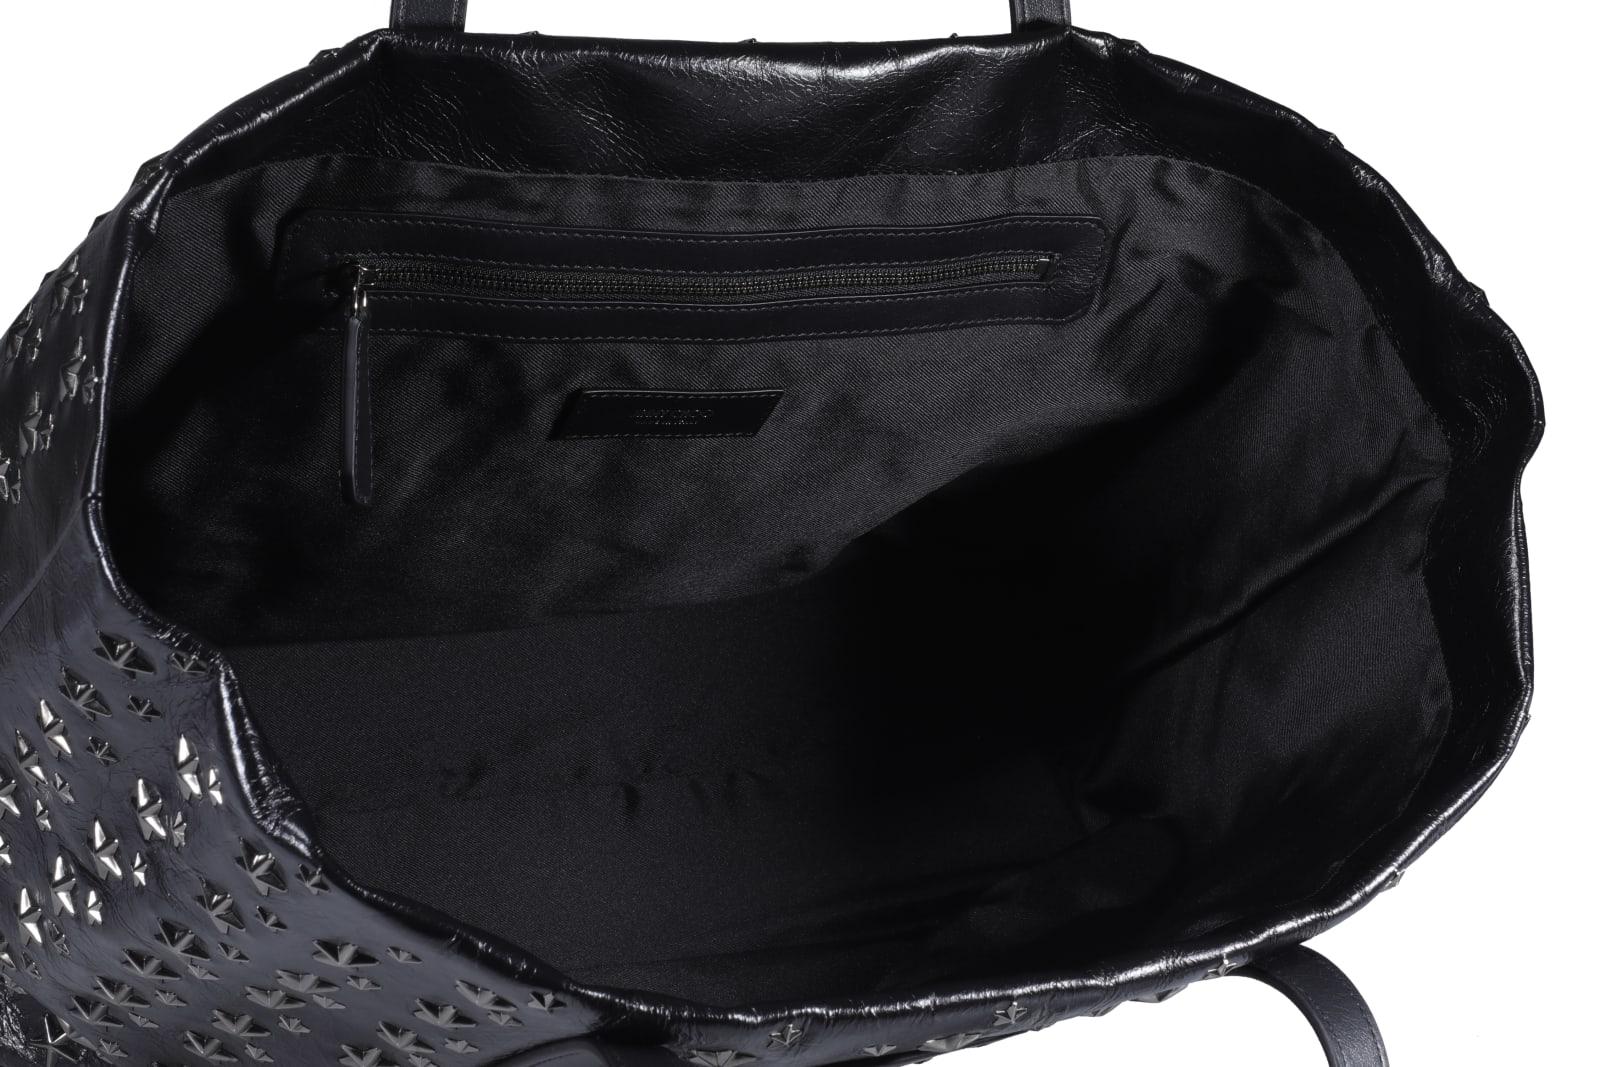 Jimmy Choo Leather Star Pimlico Tote Bag in Black for Men - Save 